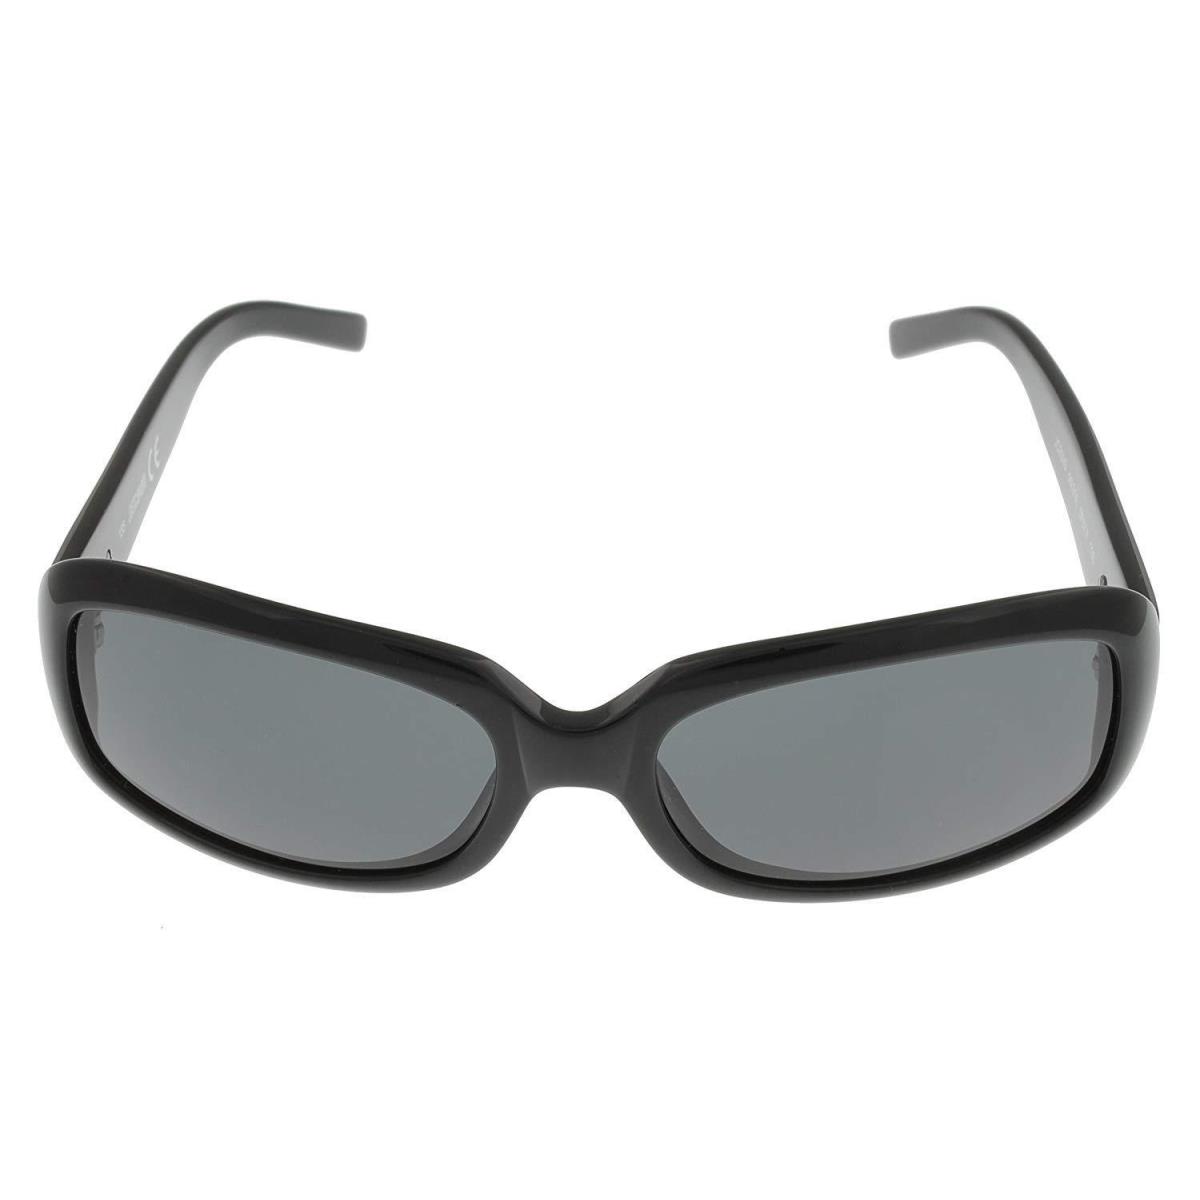 Just Cavalli Sunglasses Women Black Gray Rectangular JC259S 01A Fashion Designer